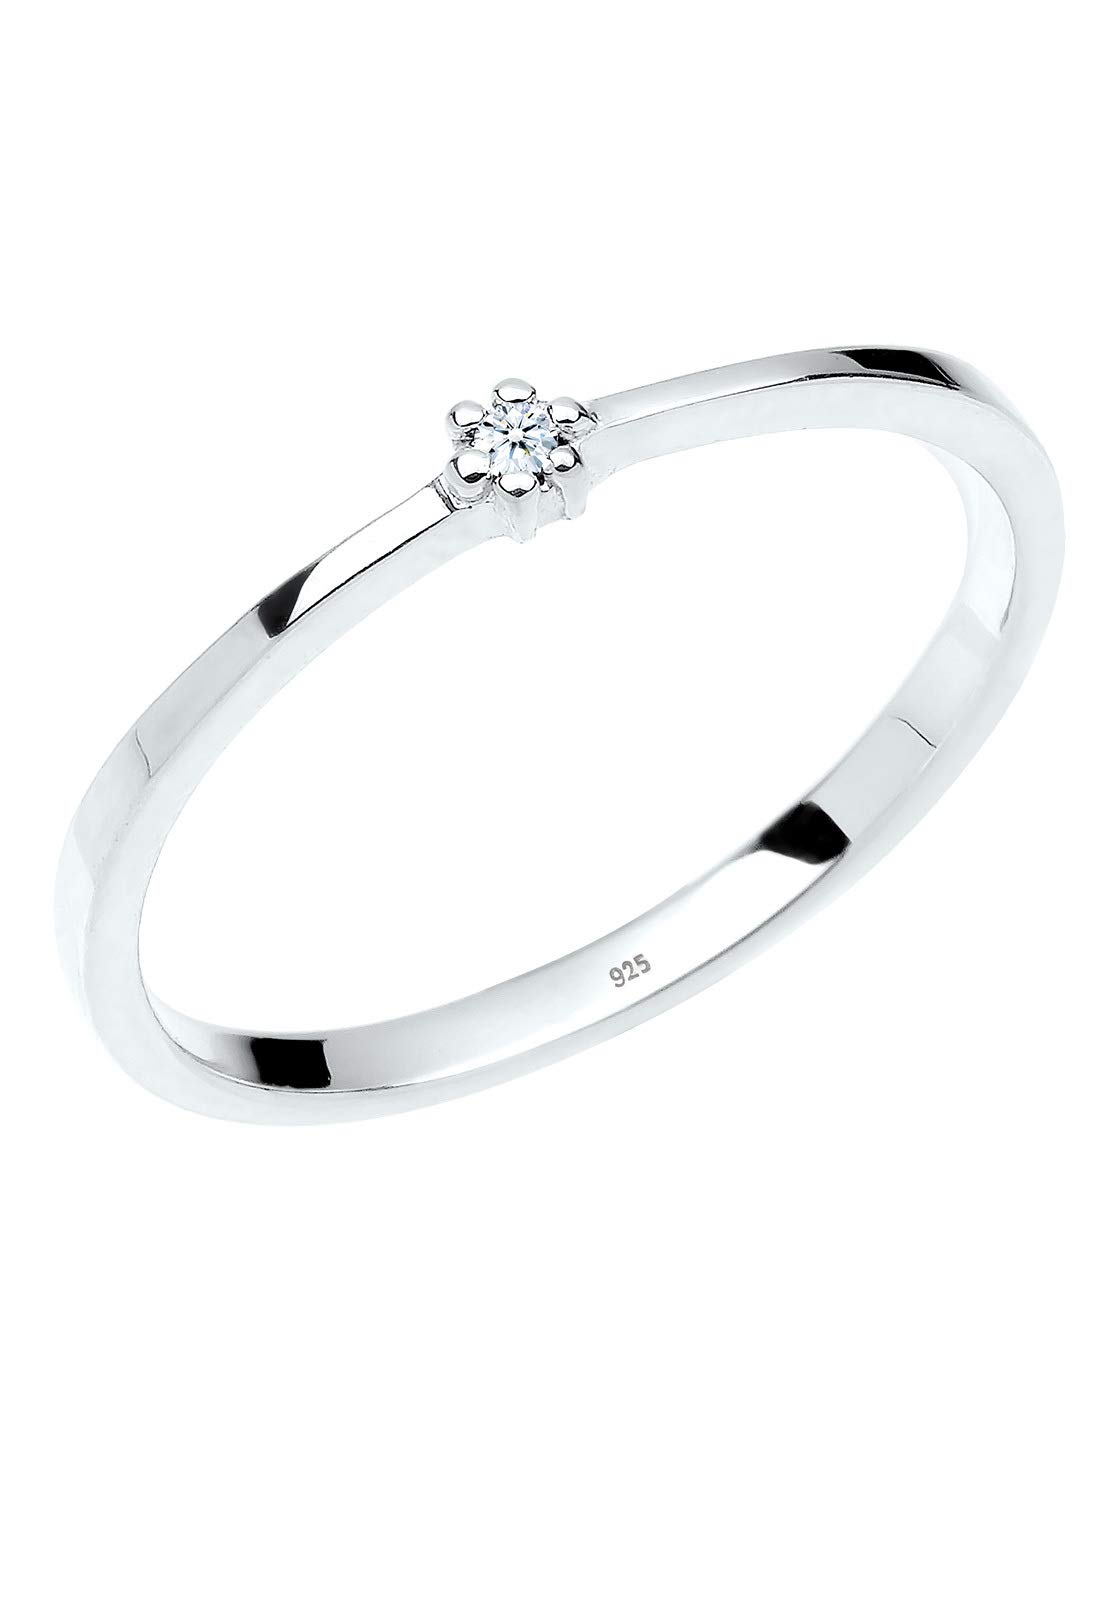 DIAMORE Ring Damen Verlobungsring mit Diamant in 925 Sterling Silber